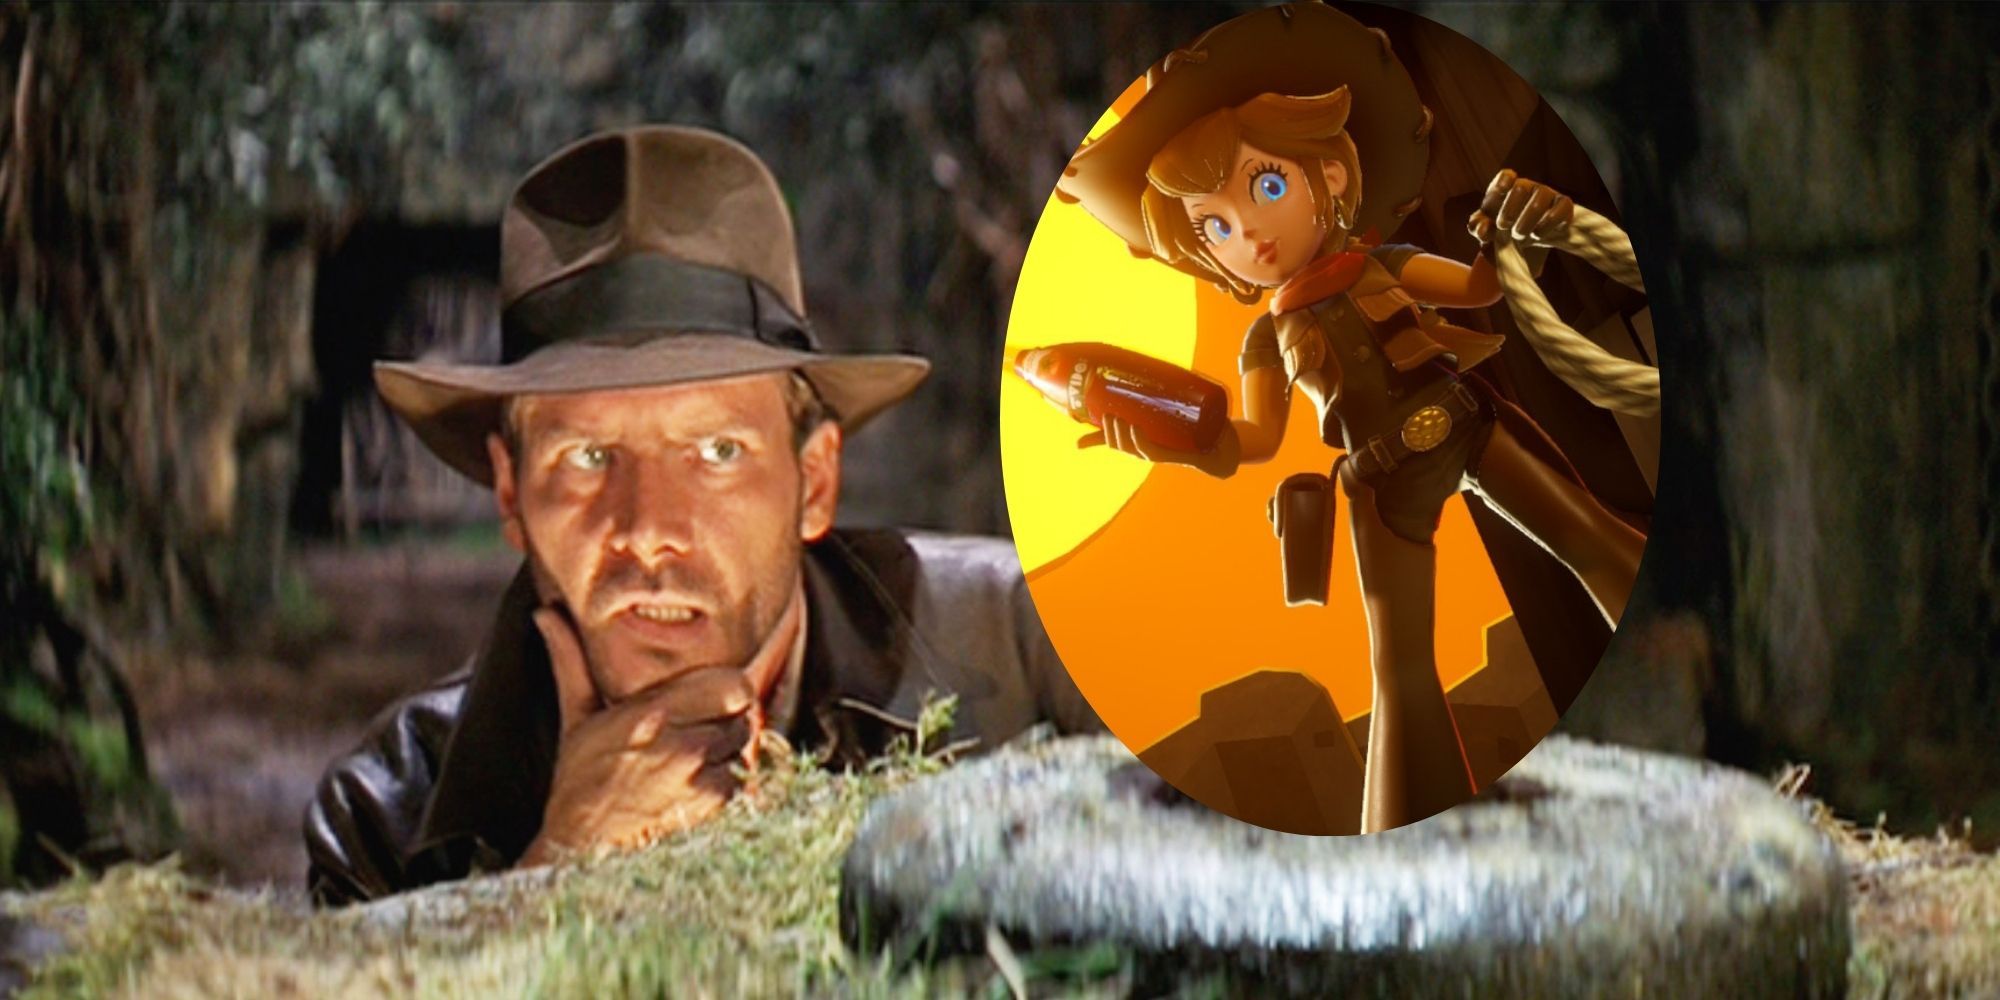 Indiana Jones stealing treasure but it's Princess Peach